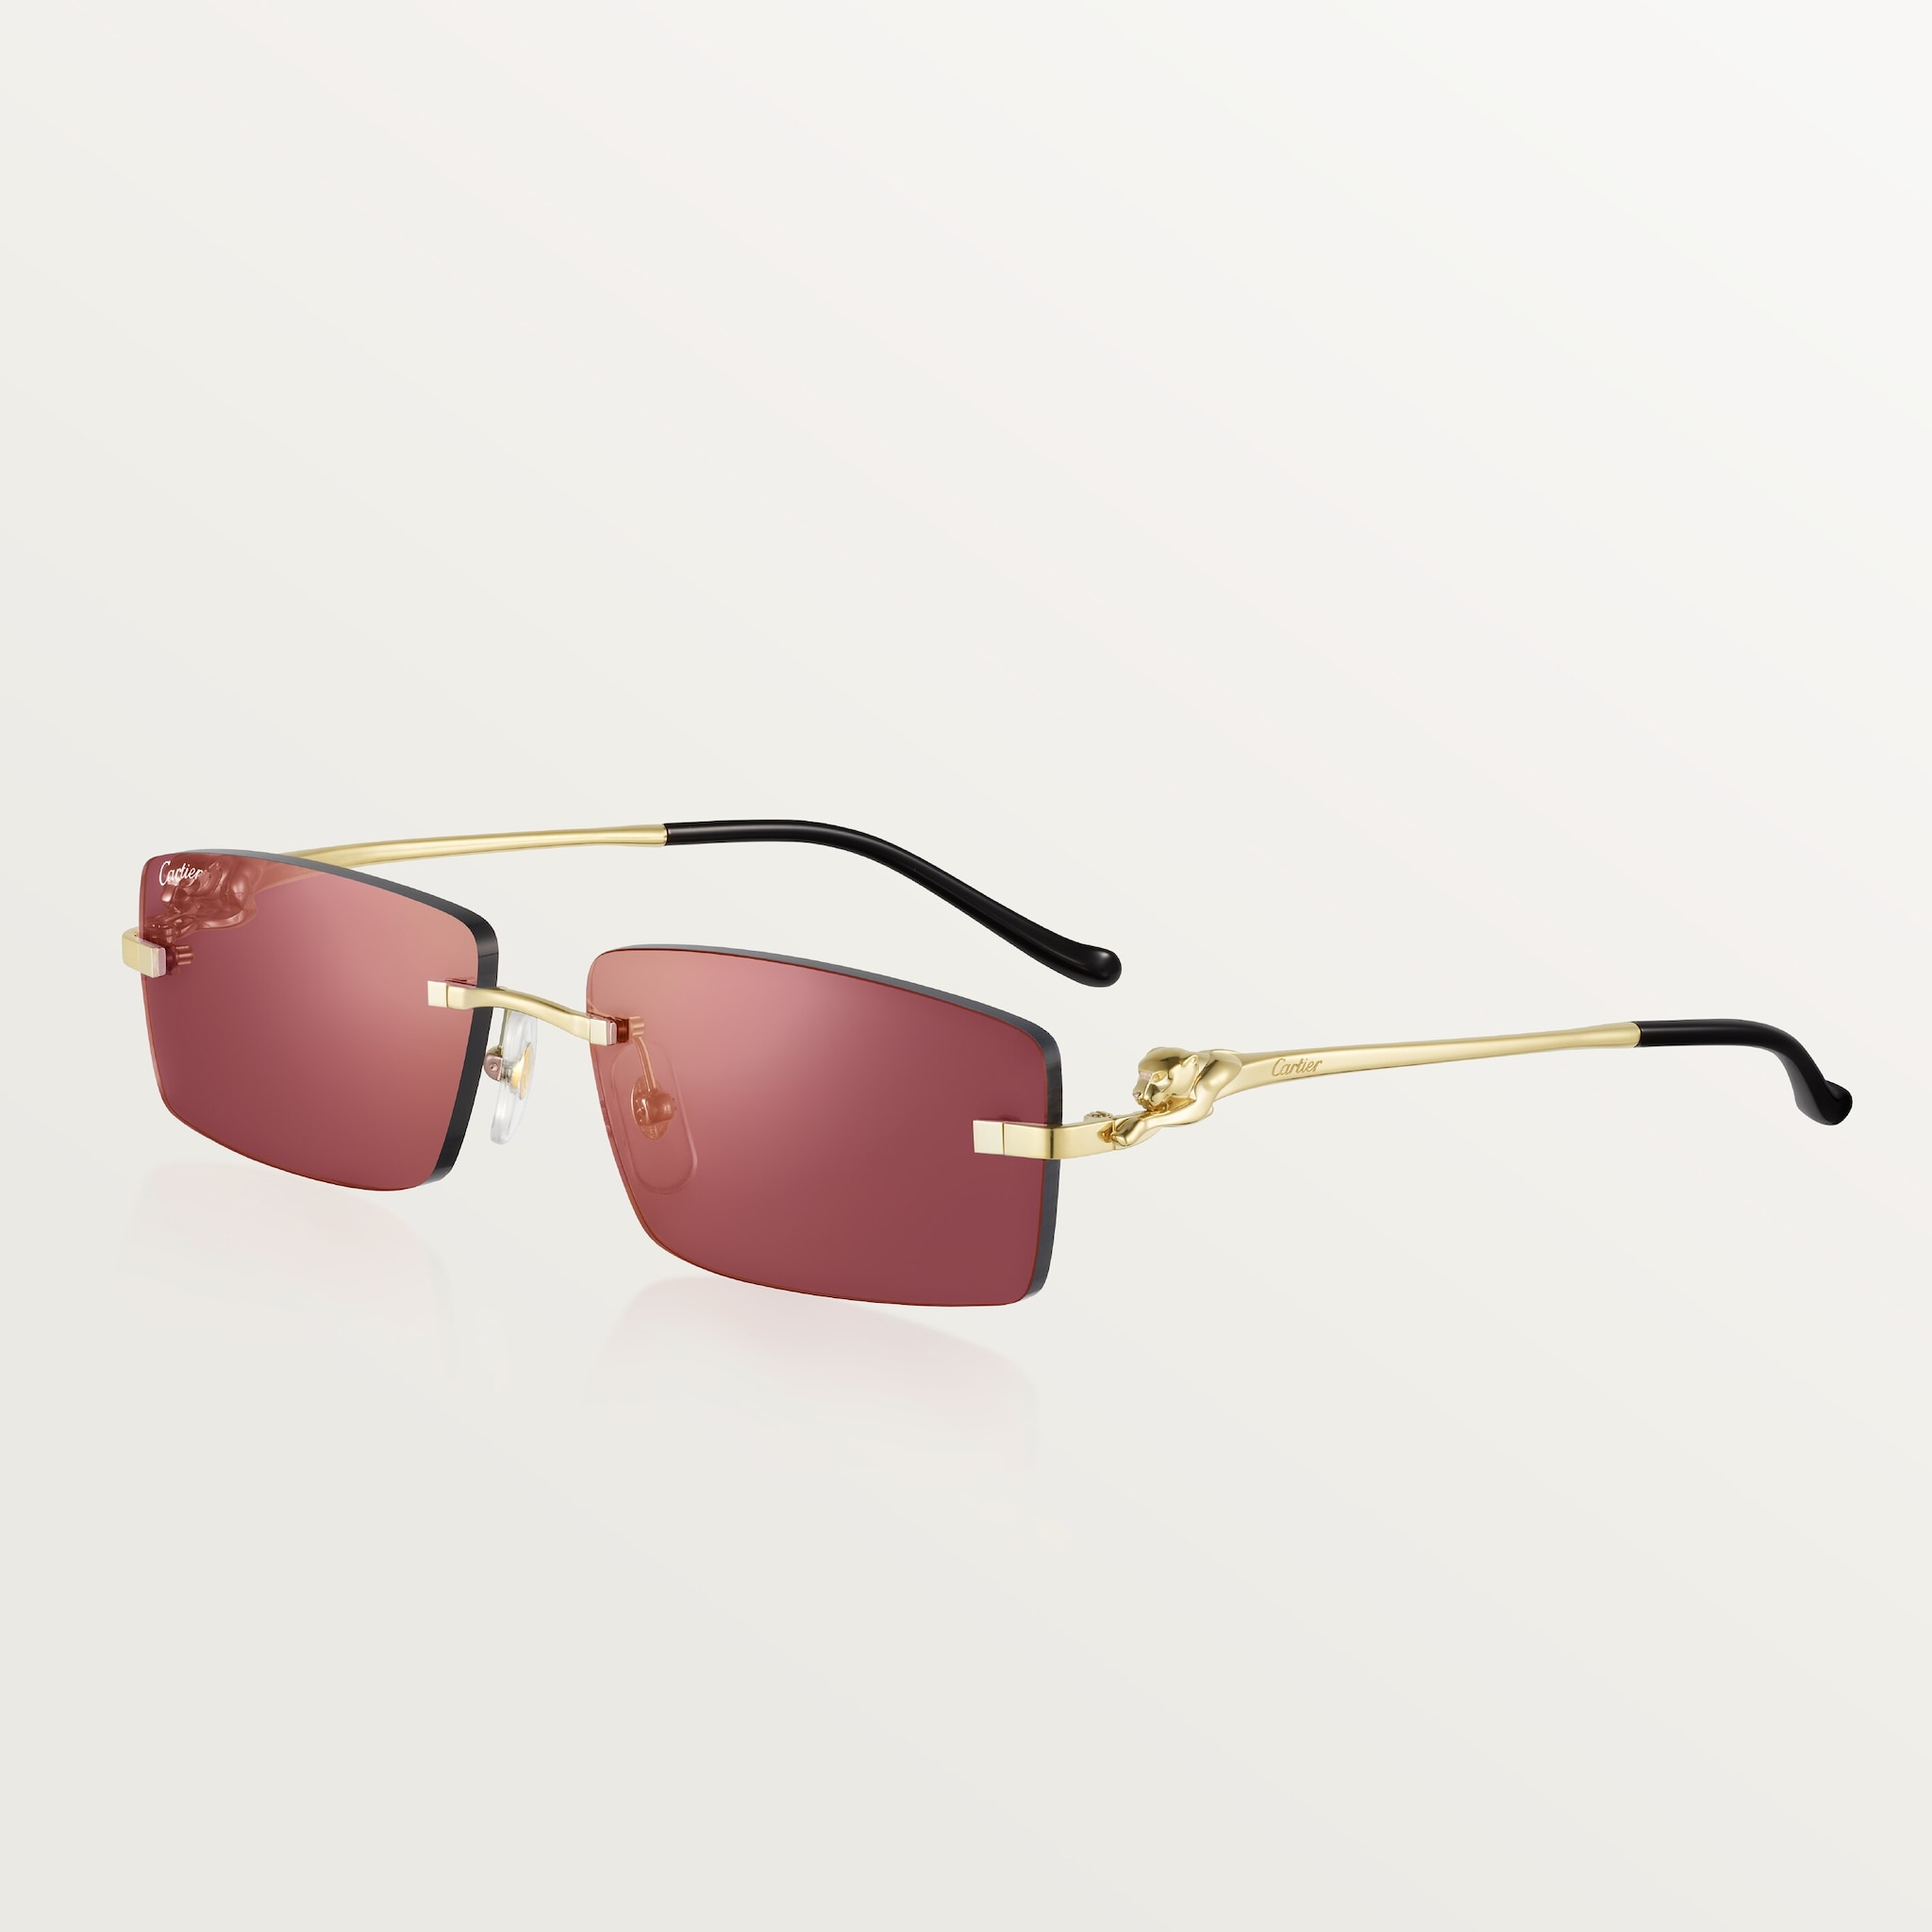 Panthère de Cartier sunglassesSmooth golden-finish metal, burgundy lenses